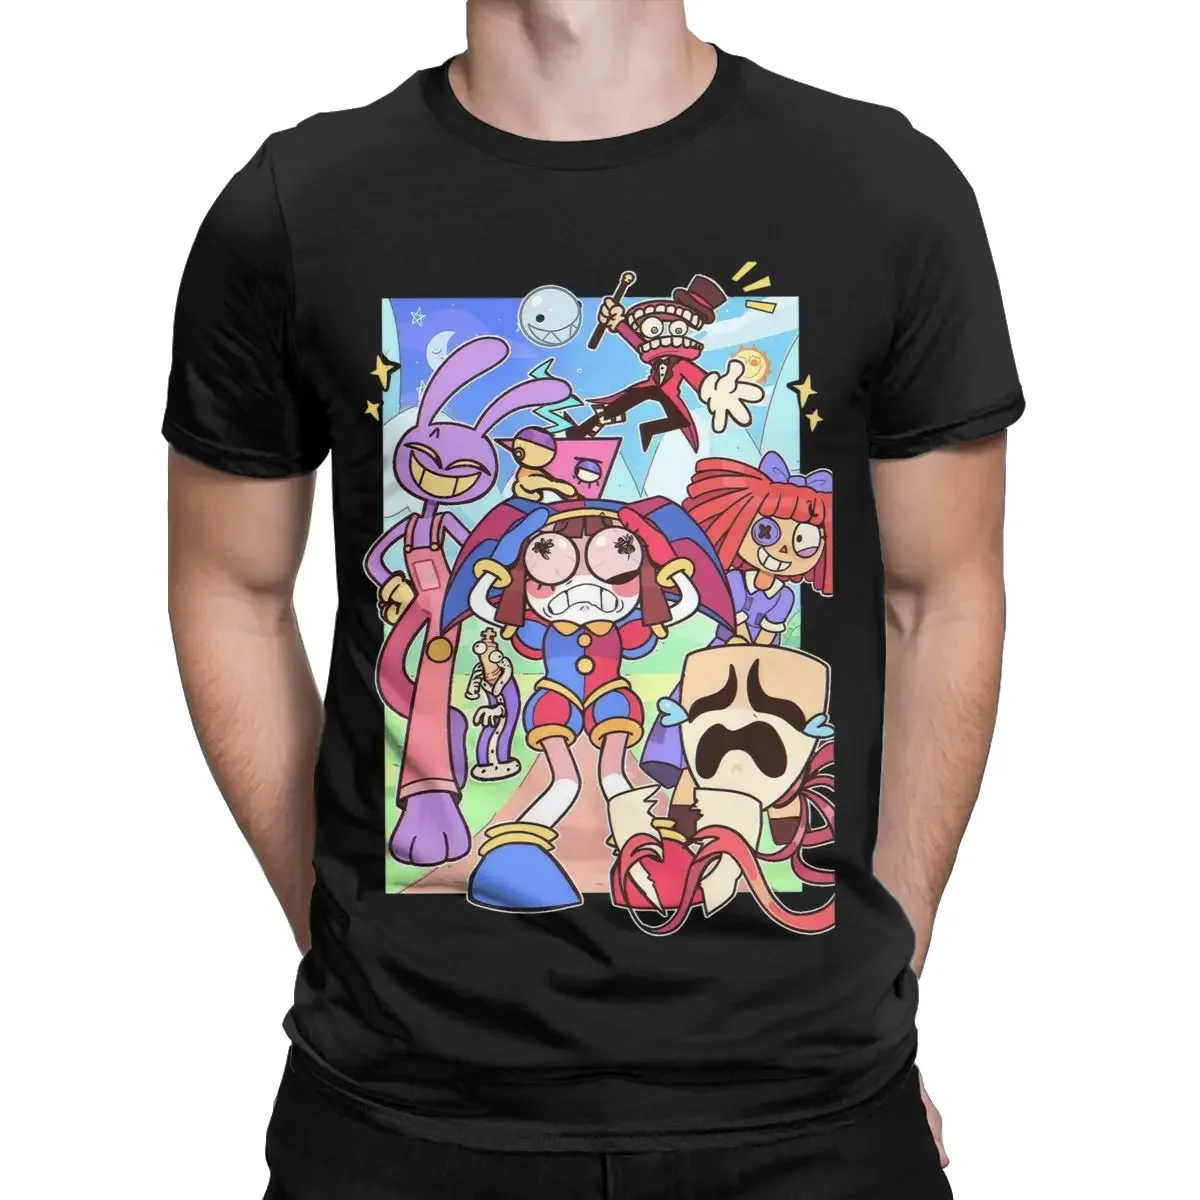 Camiseta de The Amazing Digital Circus para hombre, ropa de algodón con pompón, Tadc Jax, Hipster, manga corta, cuello redondo